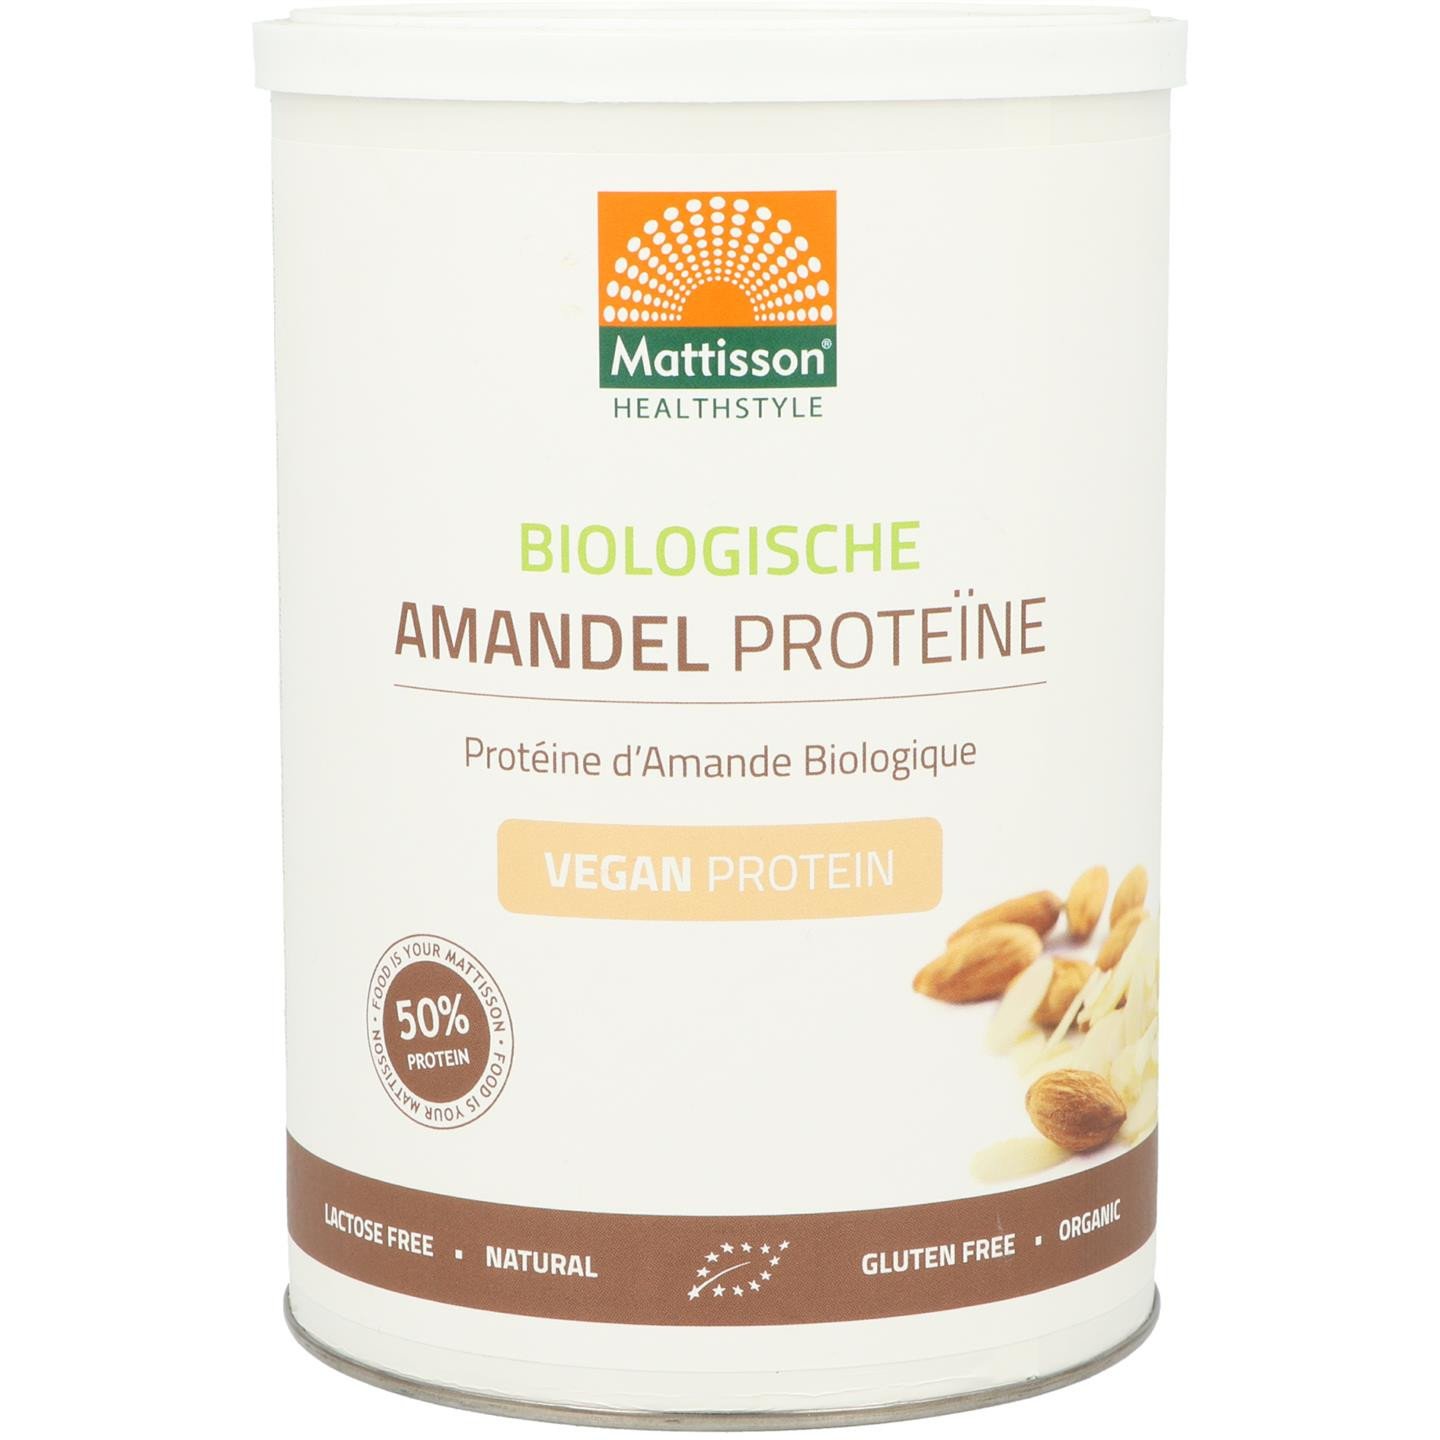 Amandel Proteïne